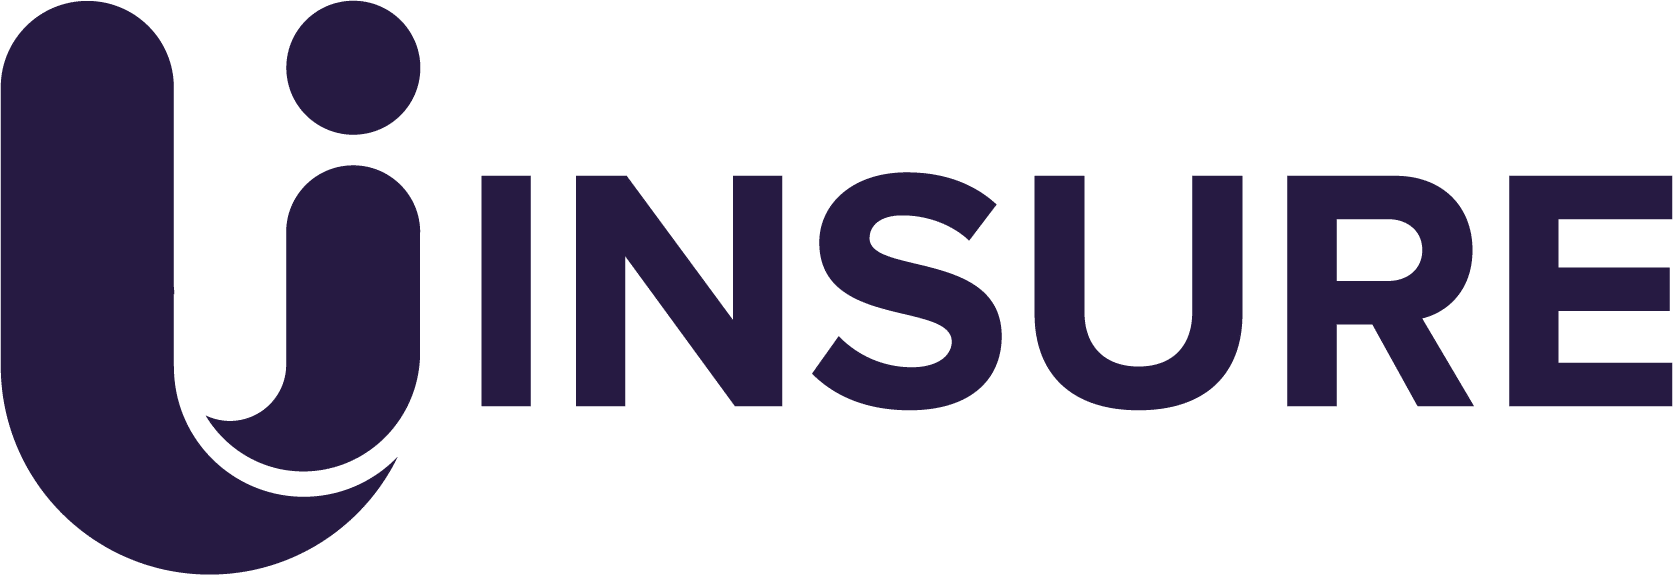 Uinsure Logo